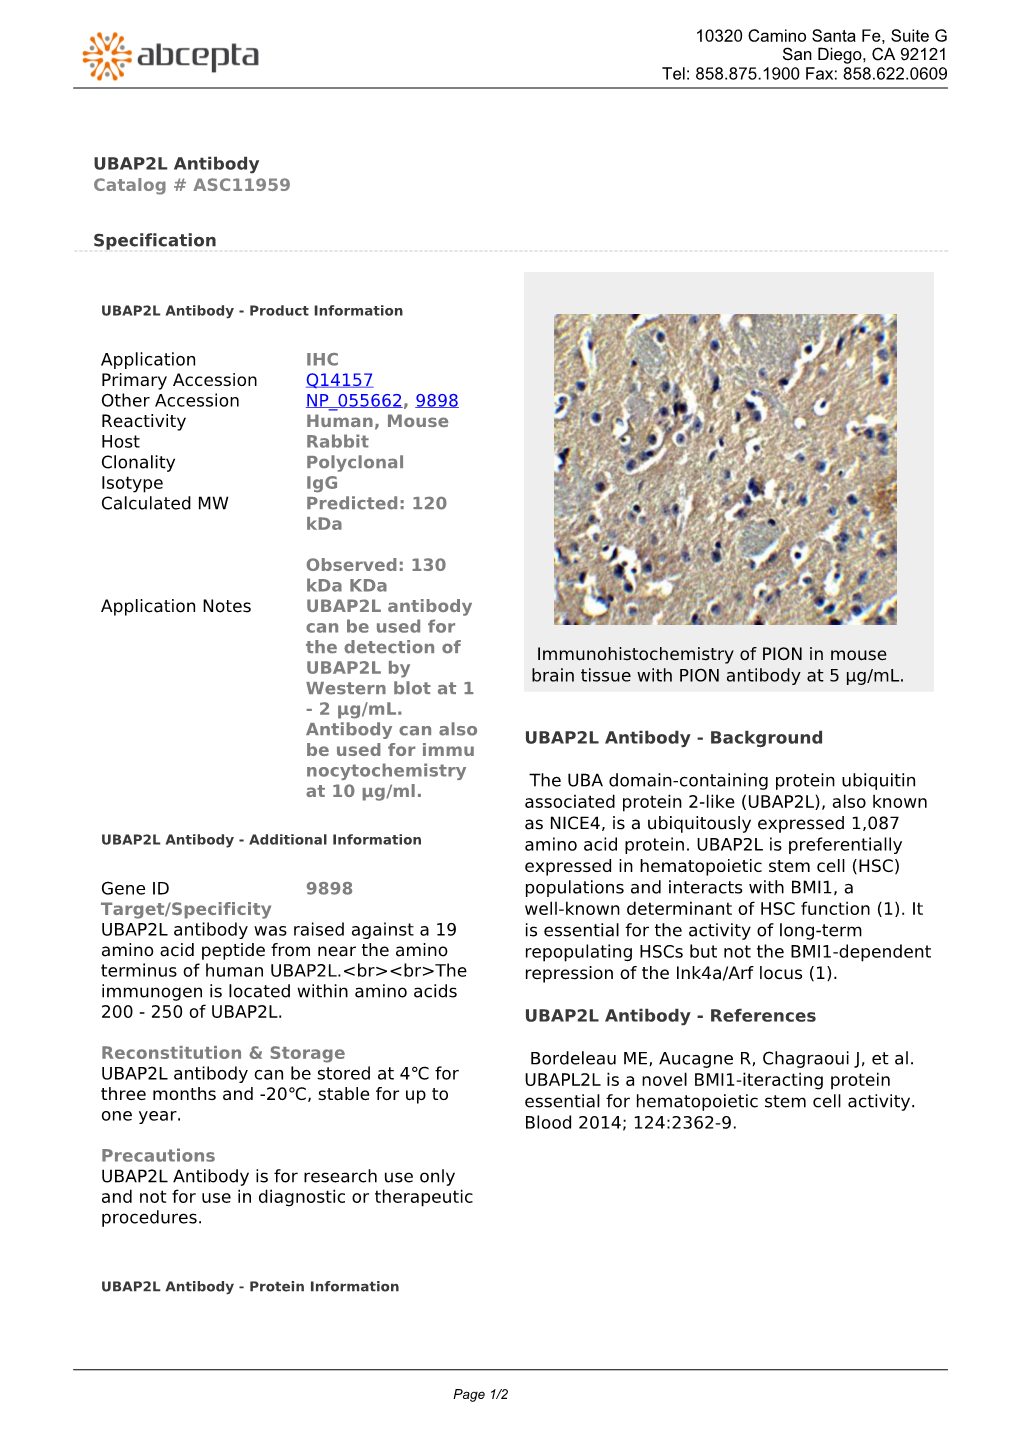 UBAP2L Antibody Catalog # ASC11959